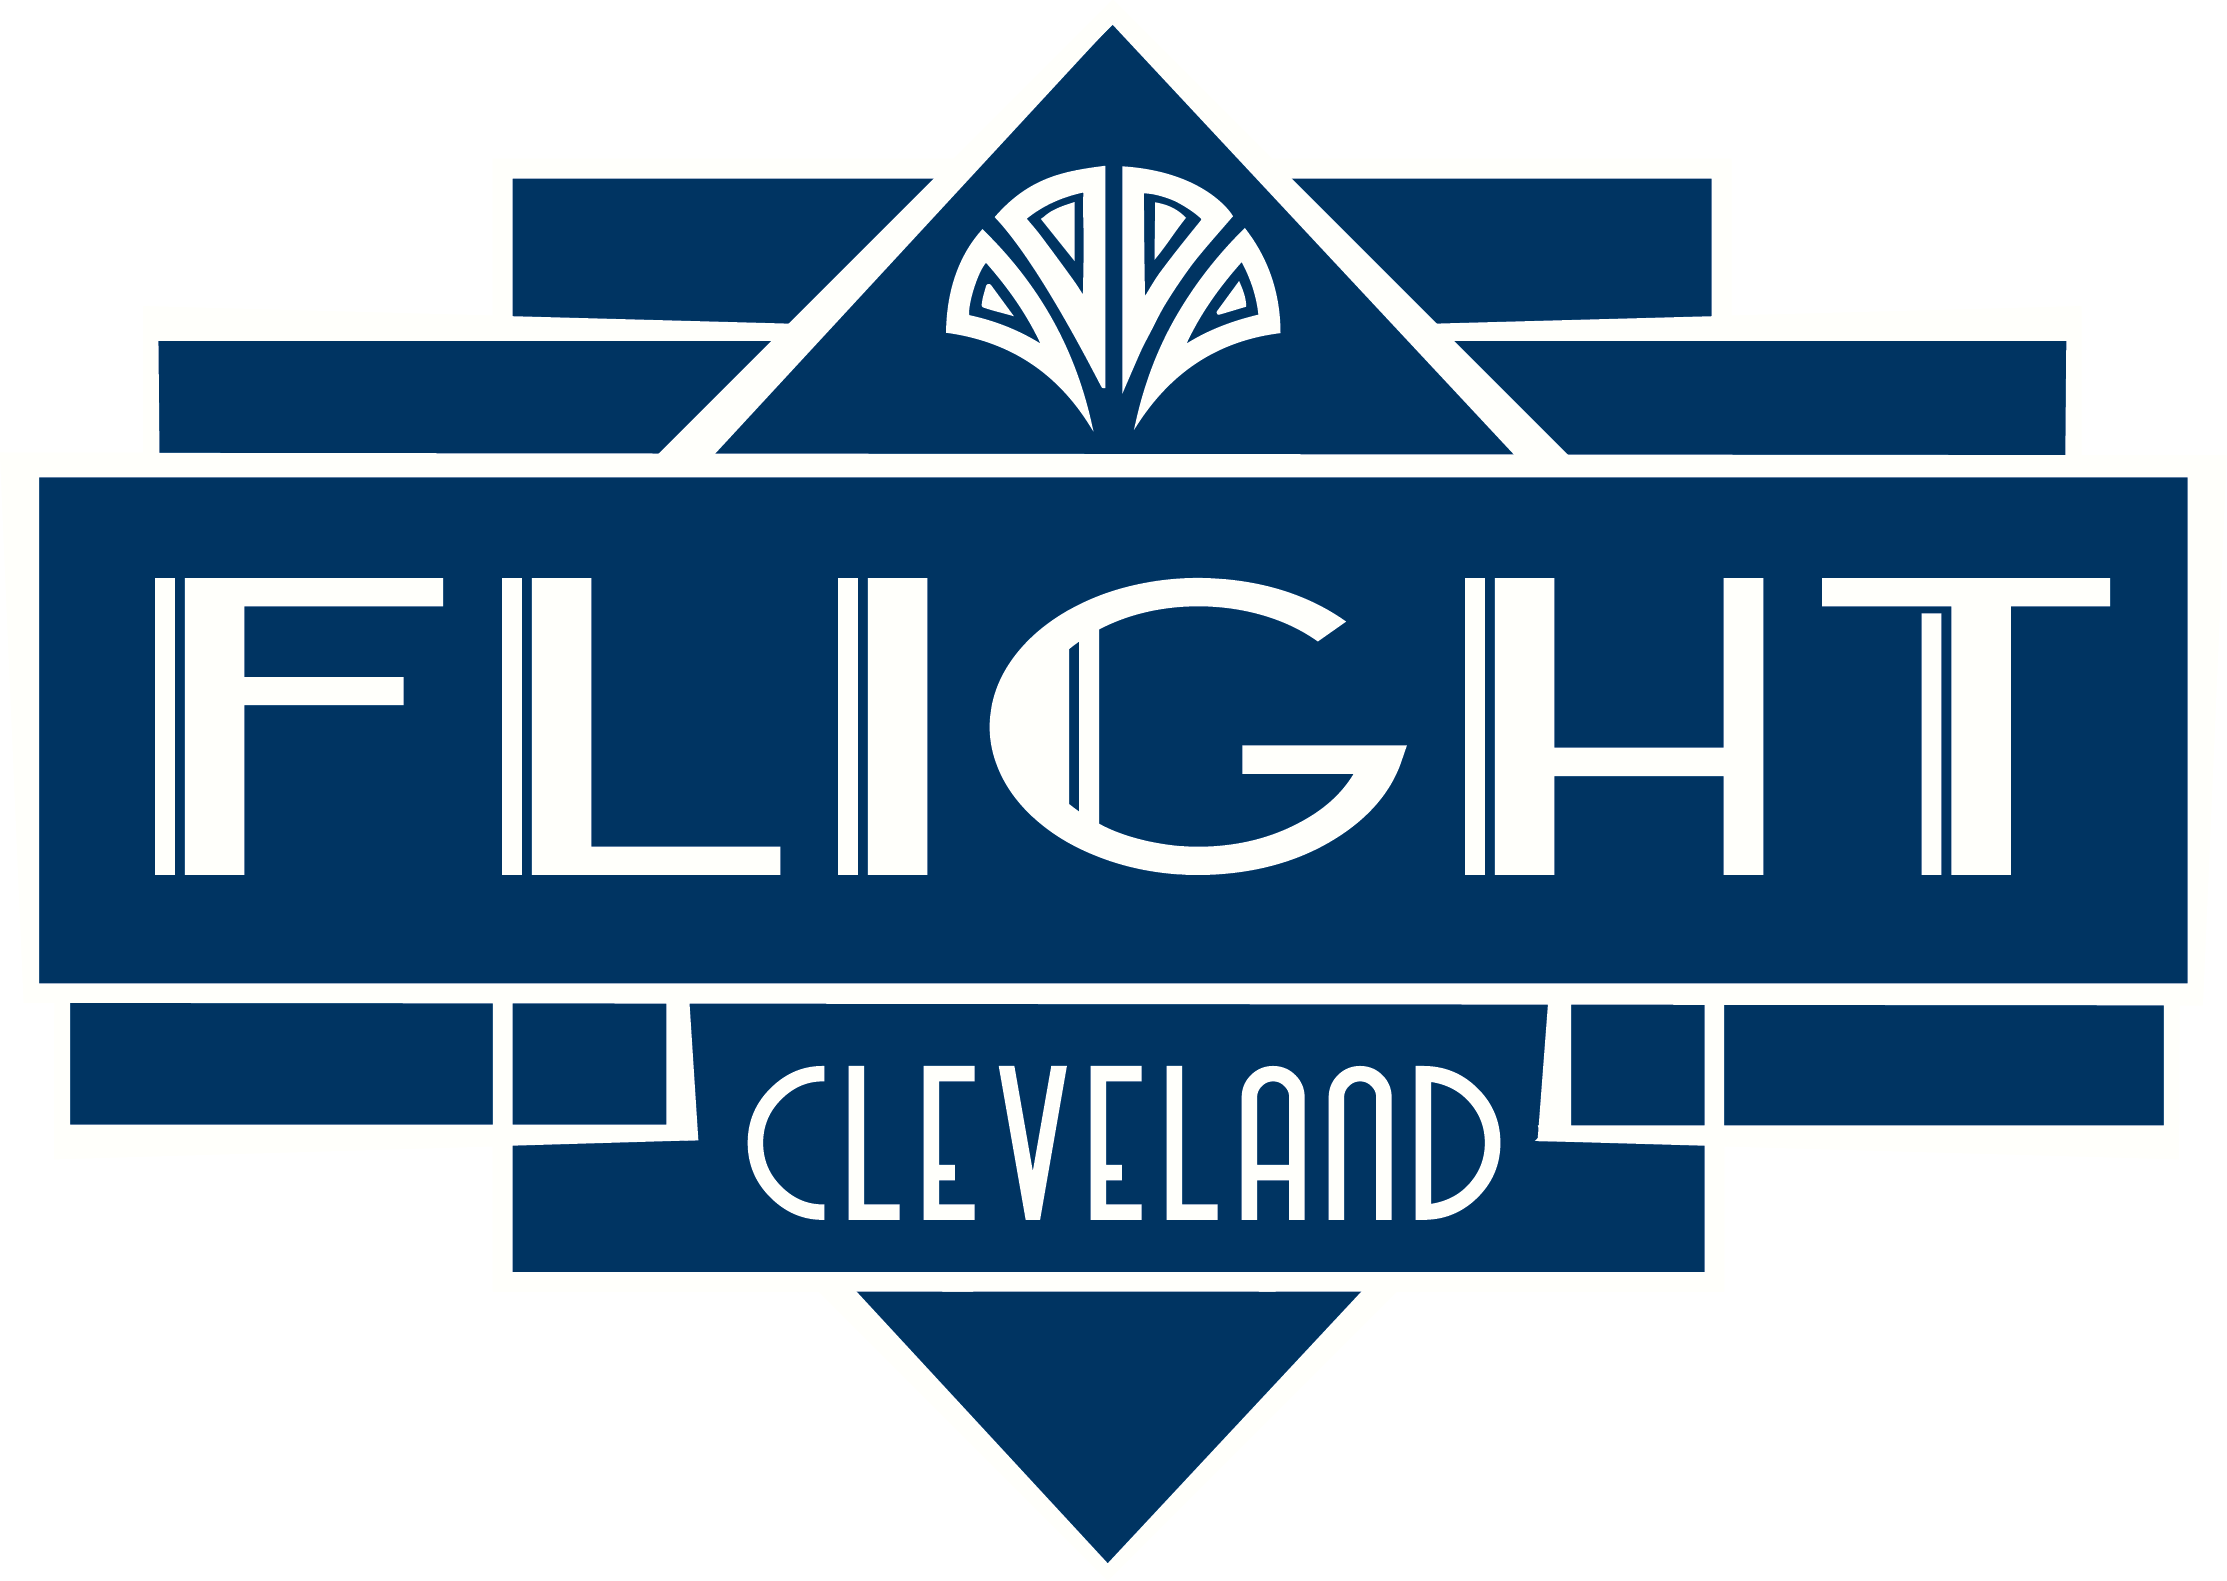 https://images.squarespace-cdn.com/content/v1/5c3dea409d5abbfef1a8f415/7605b79d-c036-4ce1-b0a6-5d52cde6db53/Flight+Cleveland+Main+Logo+WHITE+INVERSE.png